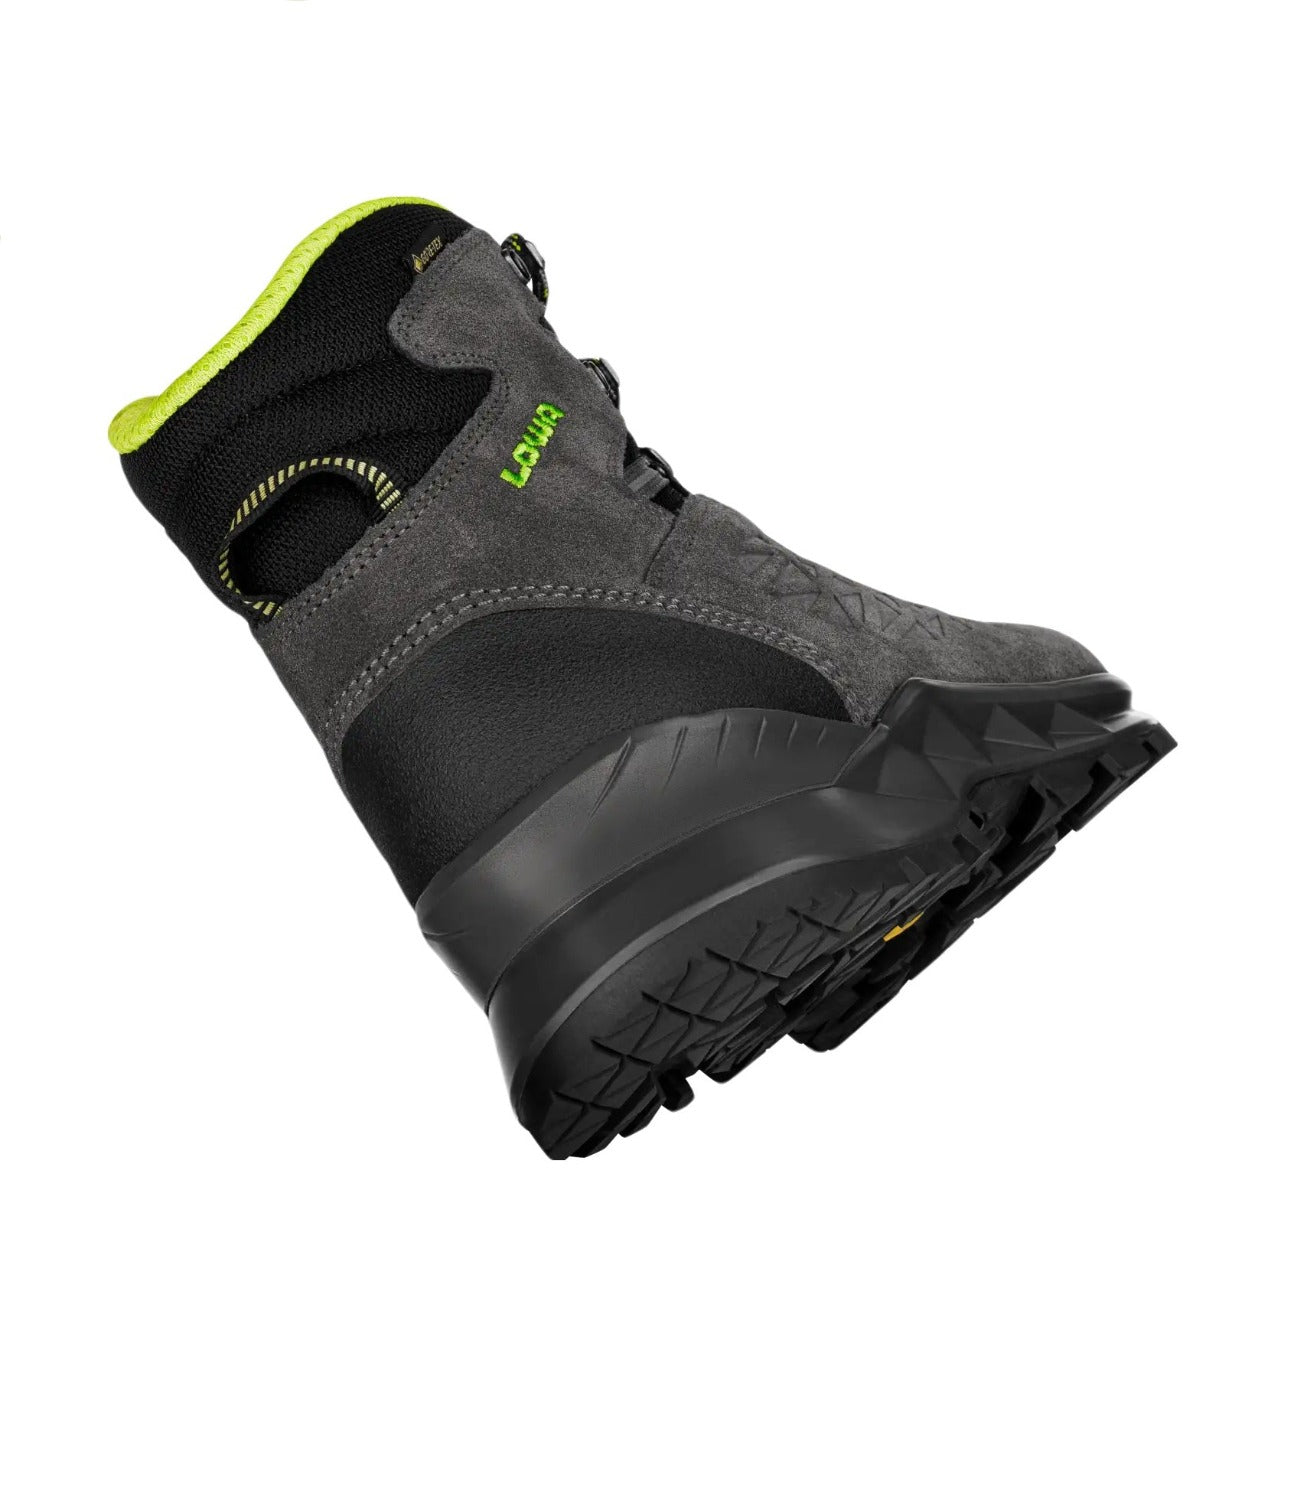  Chaussures de Rando Homme Lowa Explorer II GTX Mid Homme : renfort de talon et maintien